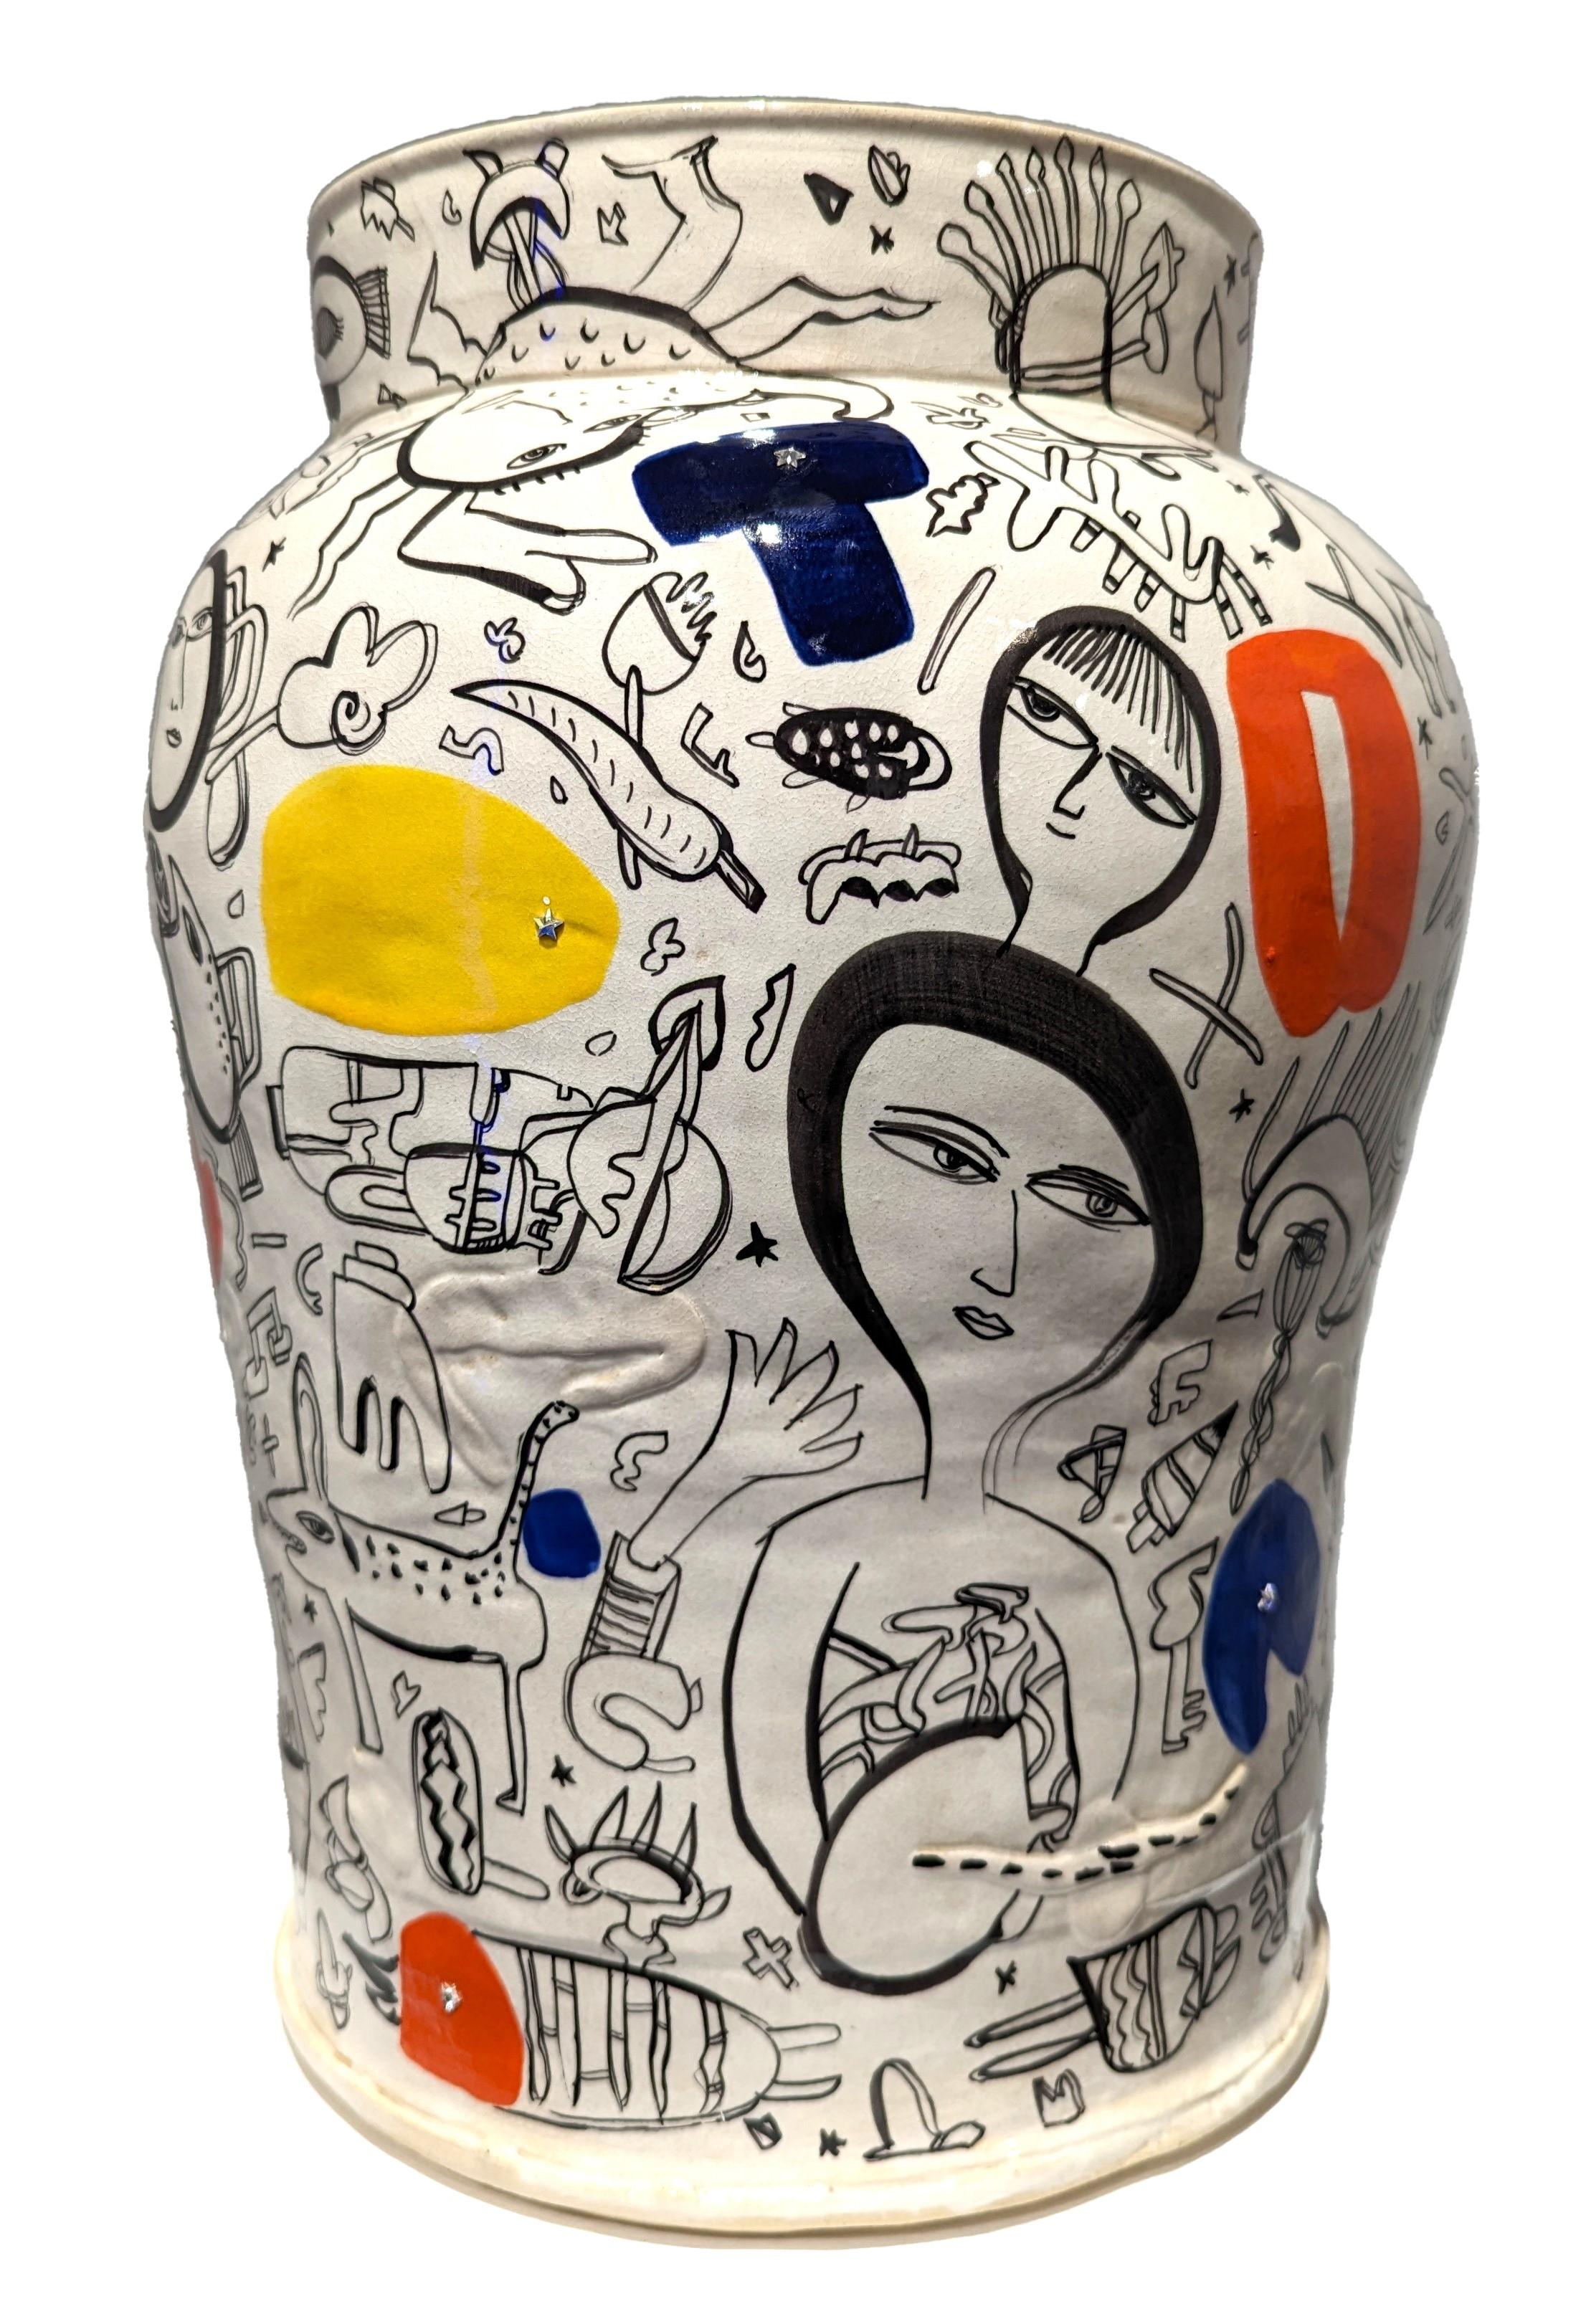 "Listening" White, Orange, Blue, & Yellow Stoneware Jar with Figurative Elements - Sculpture by Yeonsoo Kim